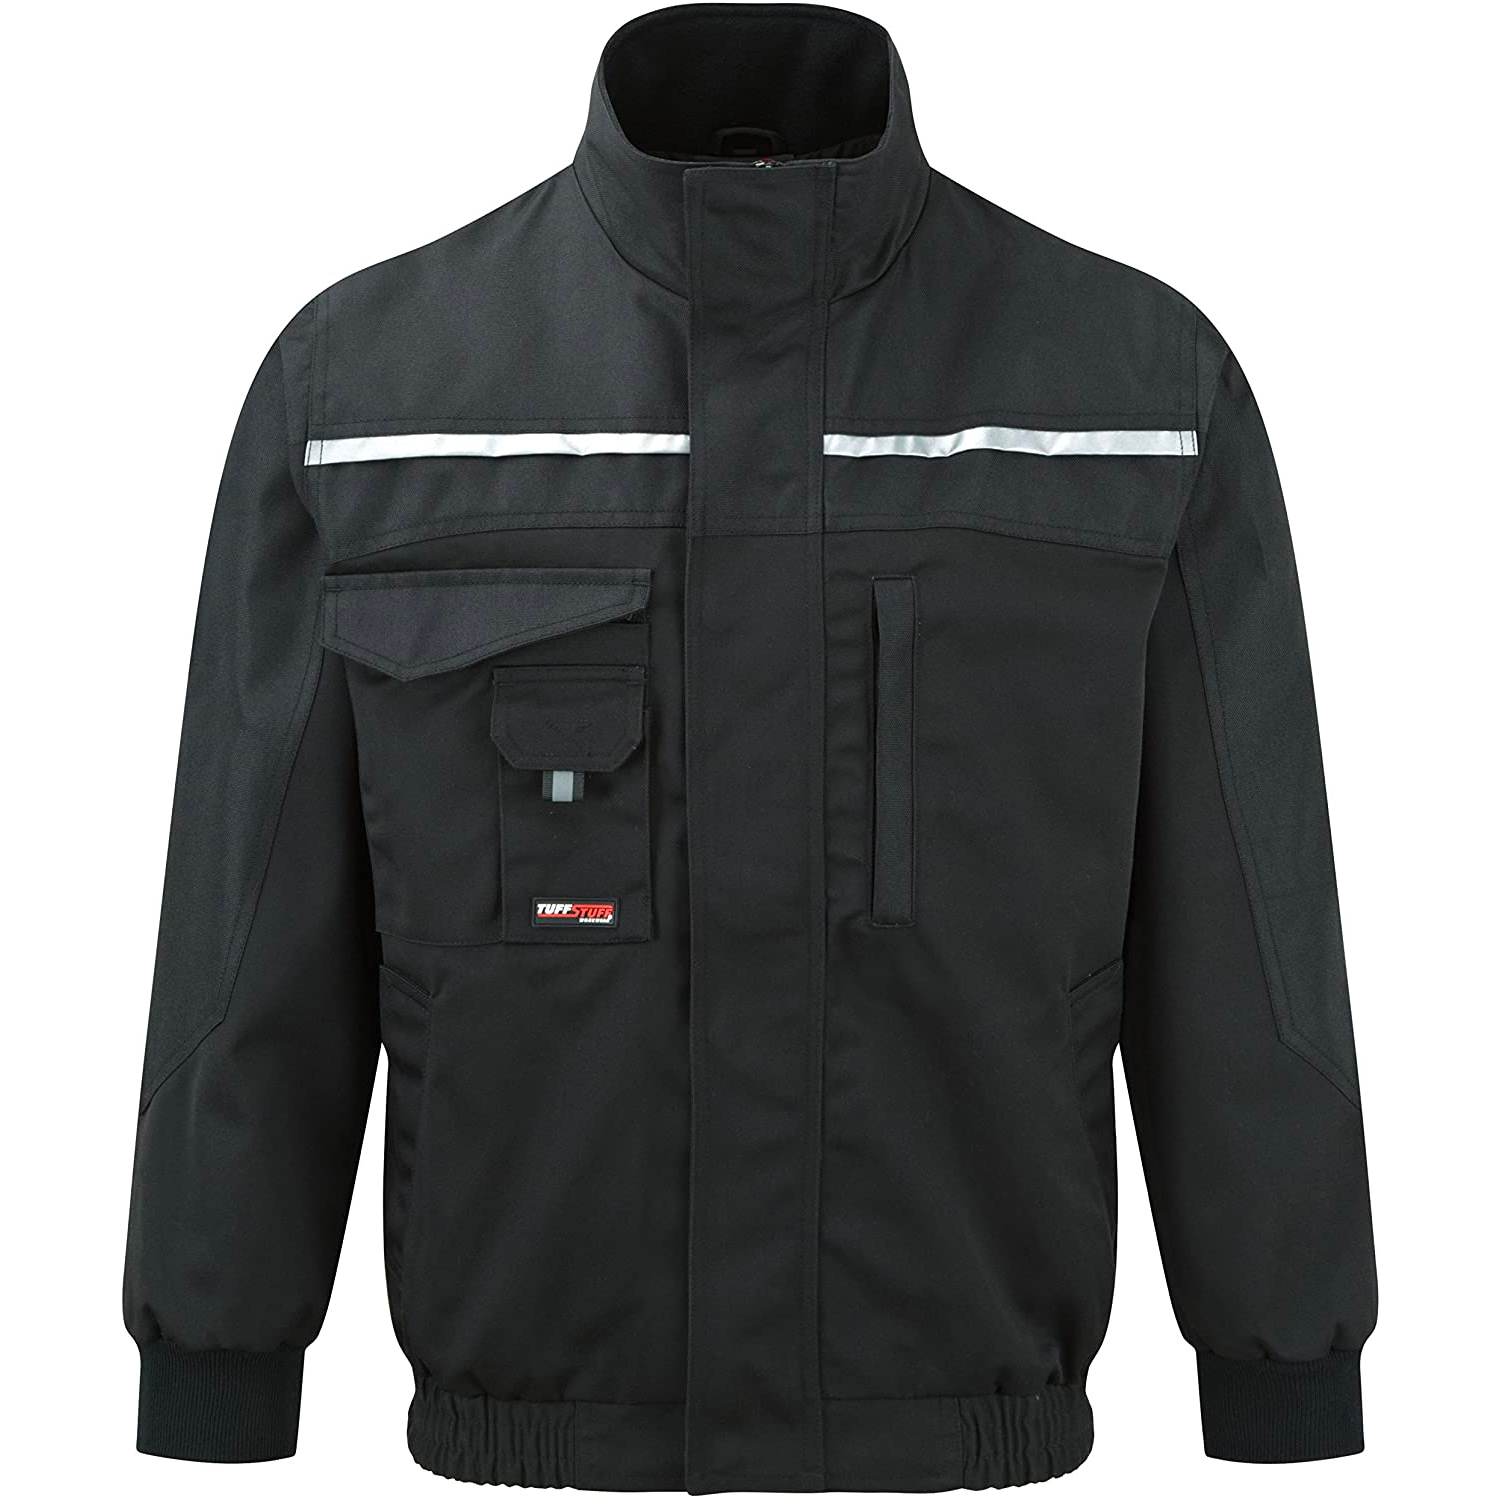 Tuff Stuff Pro Work Jacket 611 - North East Rig Out (Aberdeen) Ltd